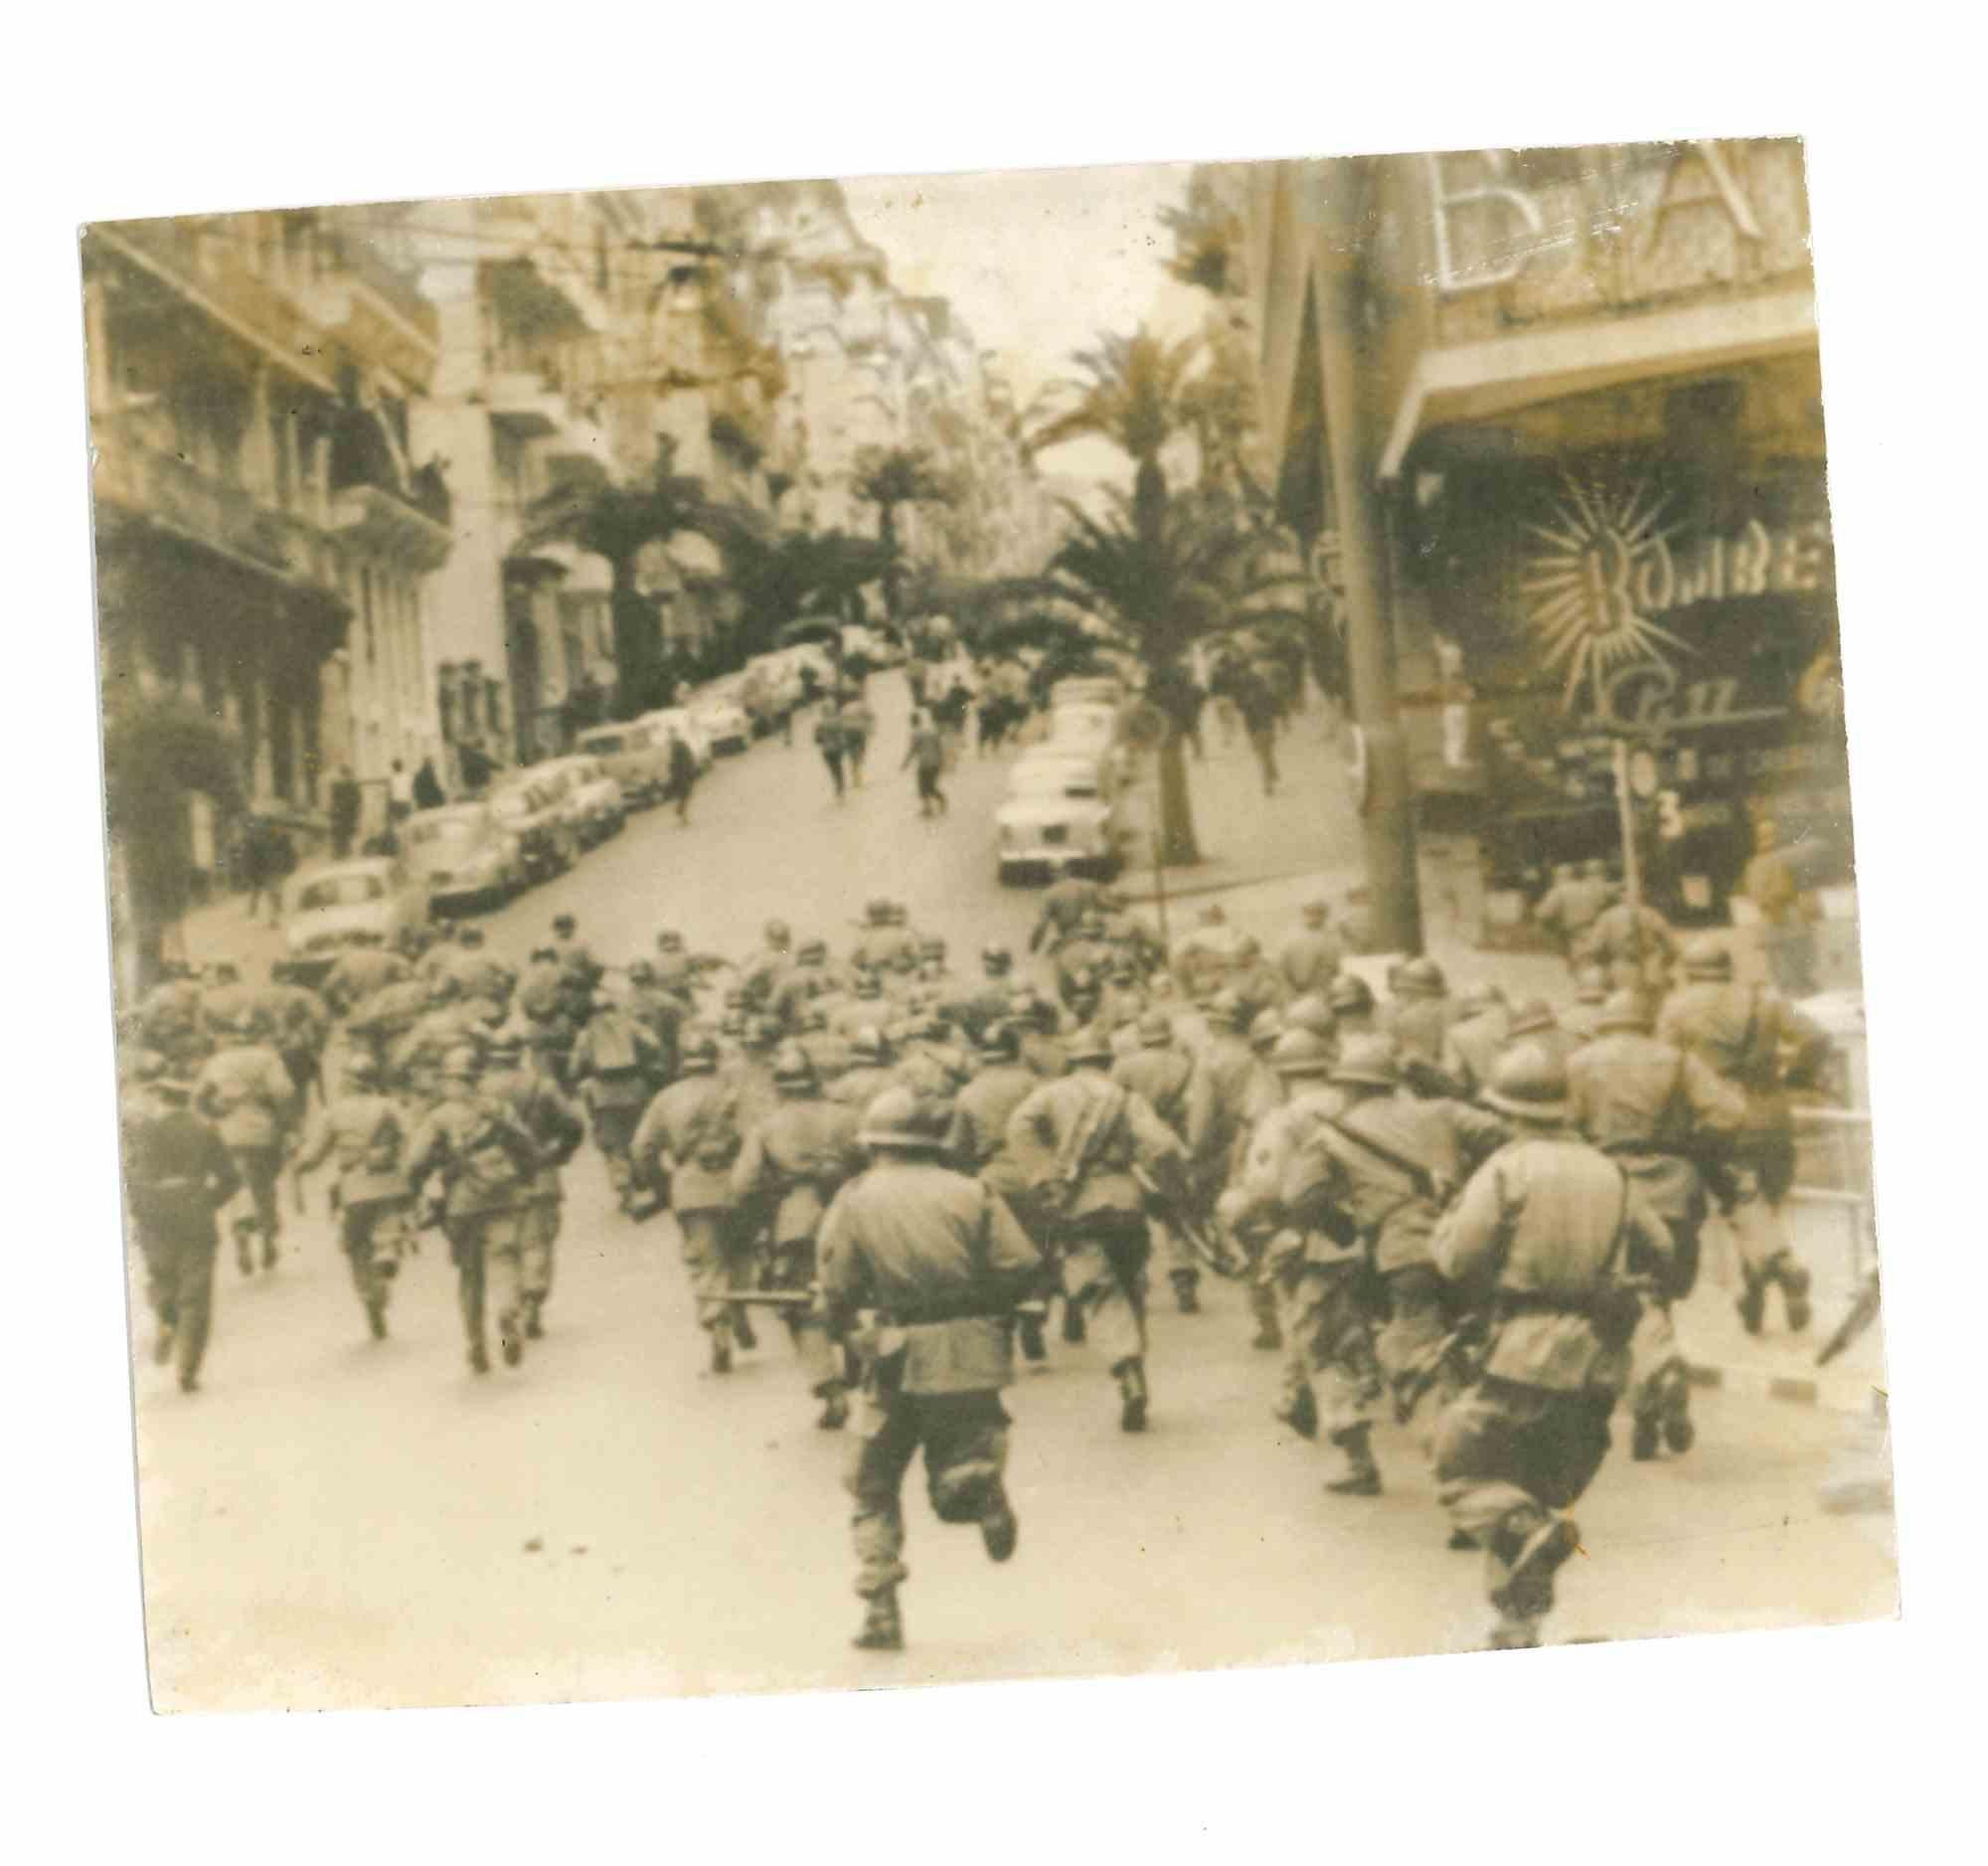 Unknown Figurative Photograph - Soldiers in Algeria - Historical Photo  - 1960s